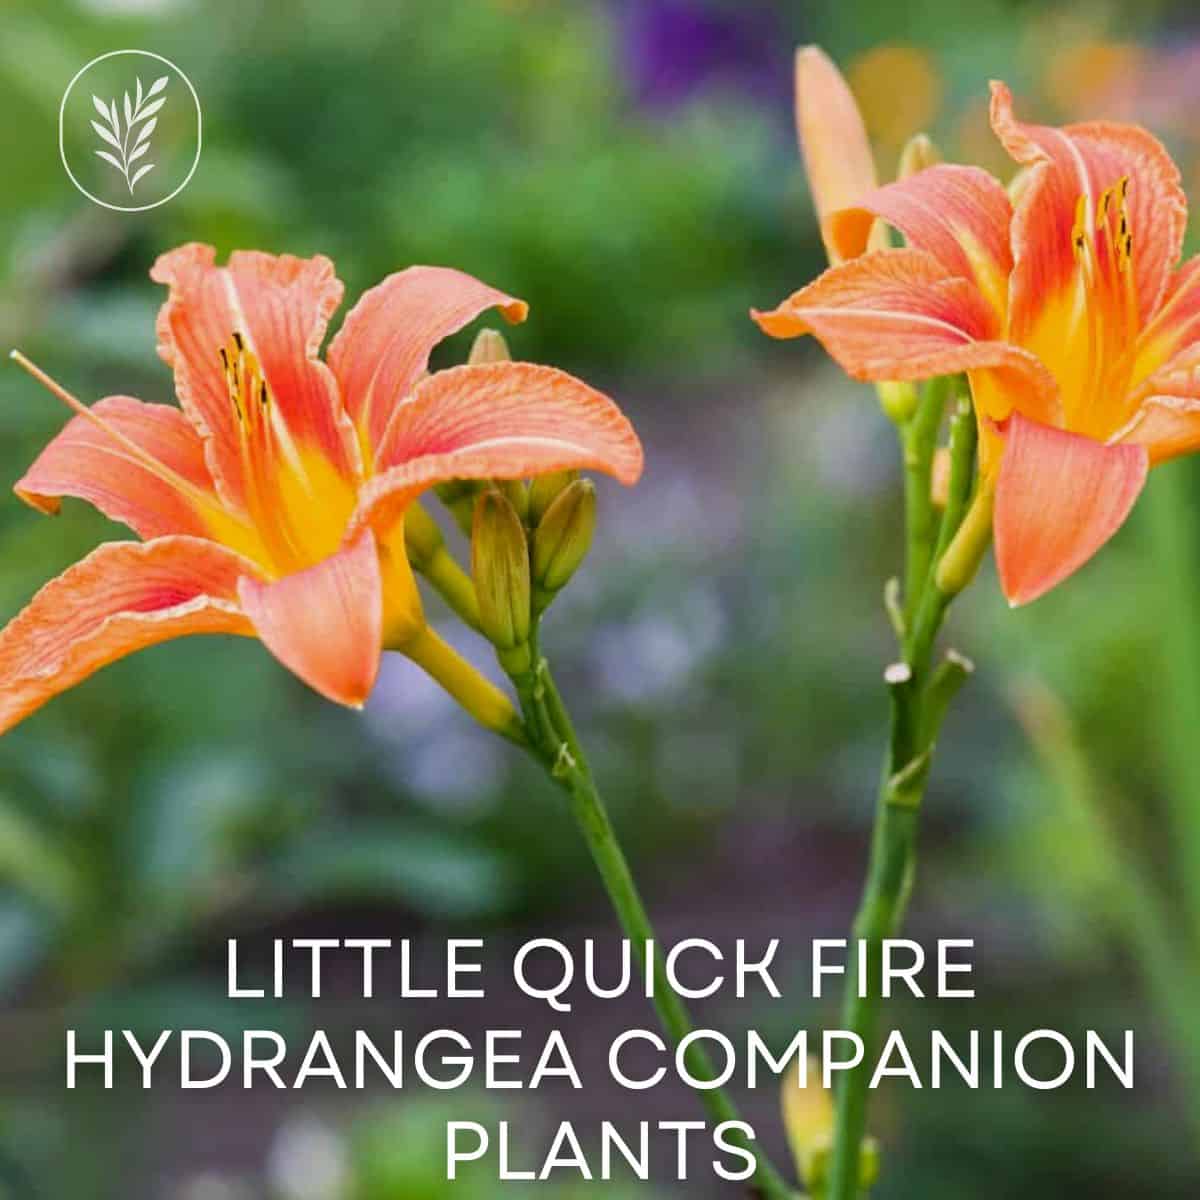 Little quick fire hydrangea companion plants via @home4theharvest